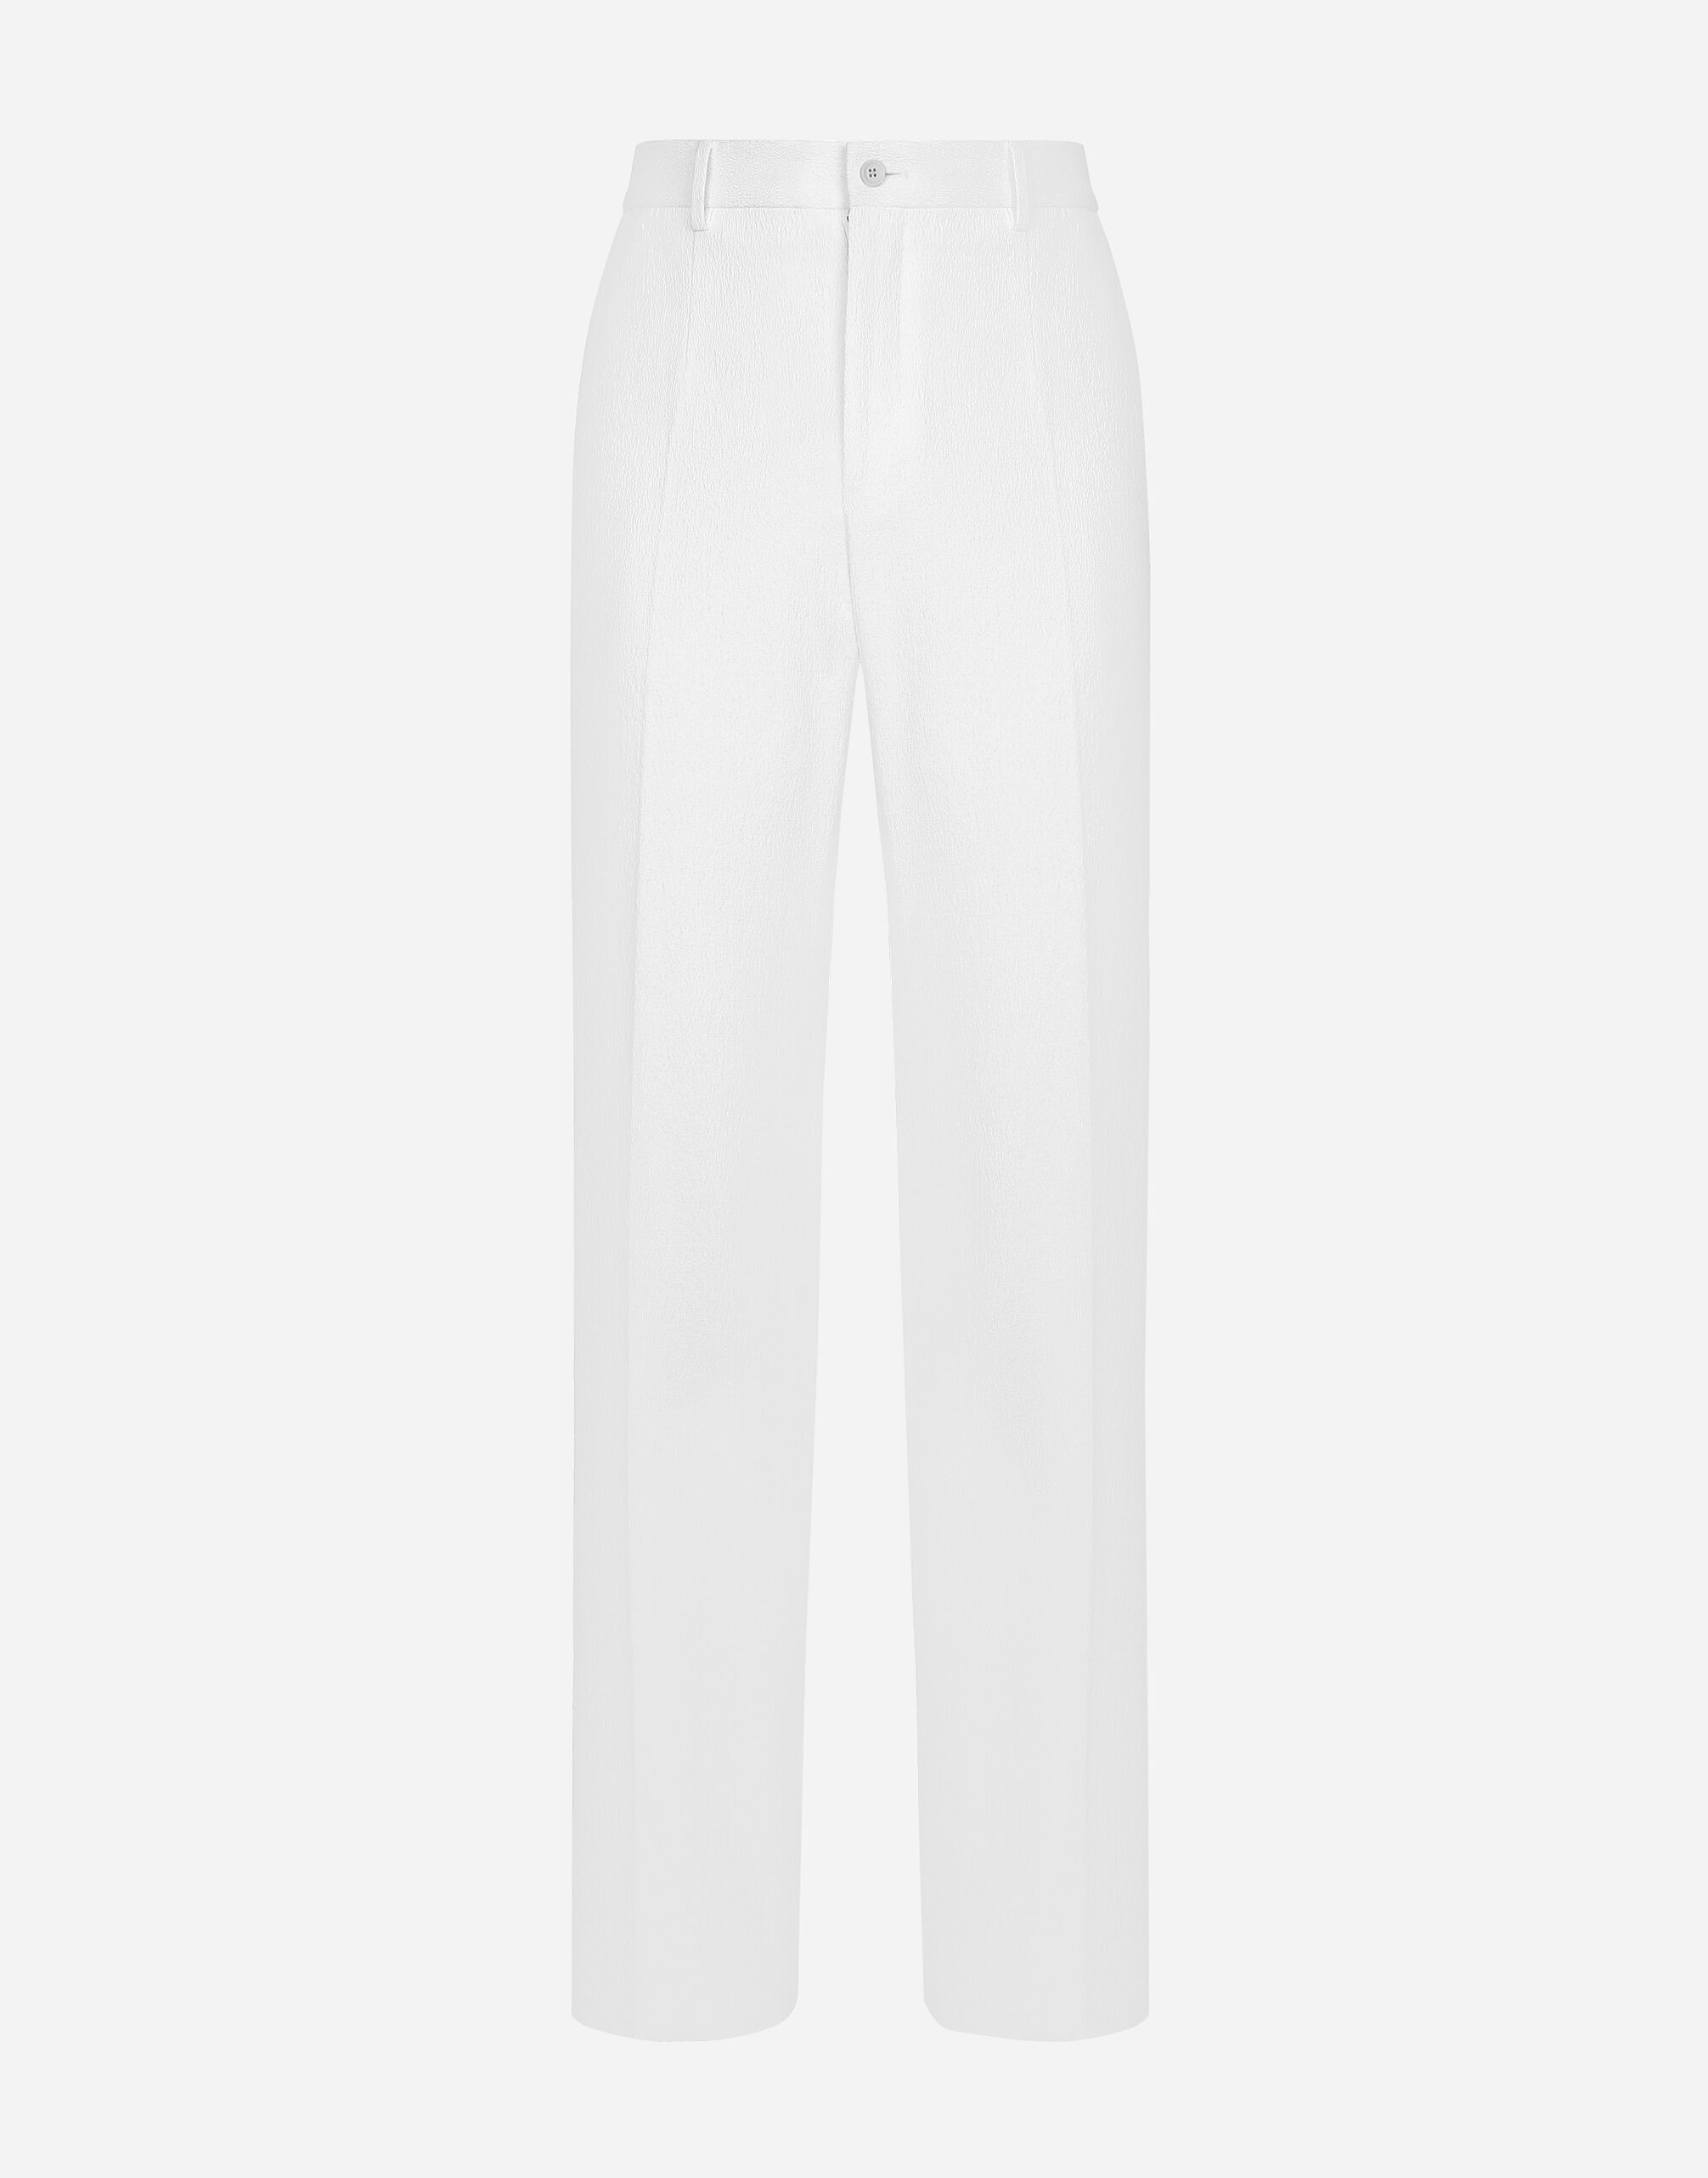 Dolce & Gabbana Tailored stretch cotton pants White CS2255AR836